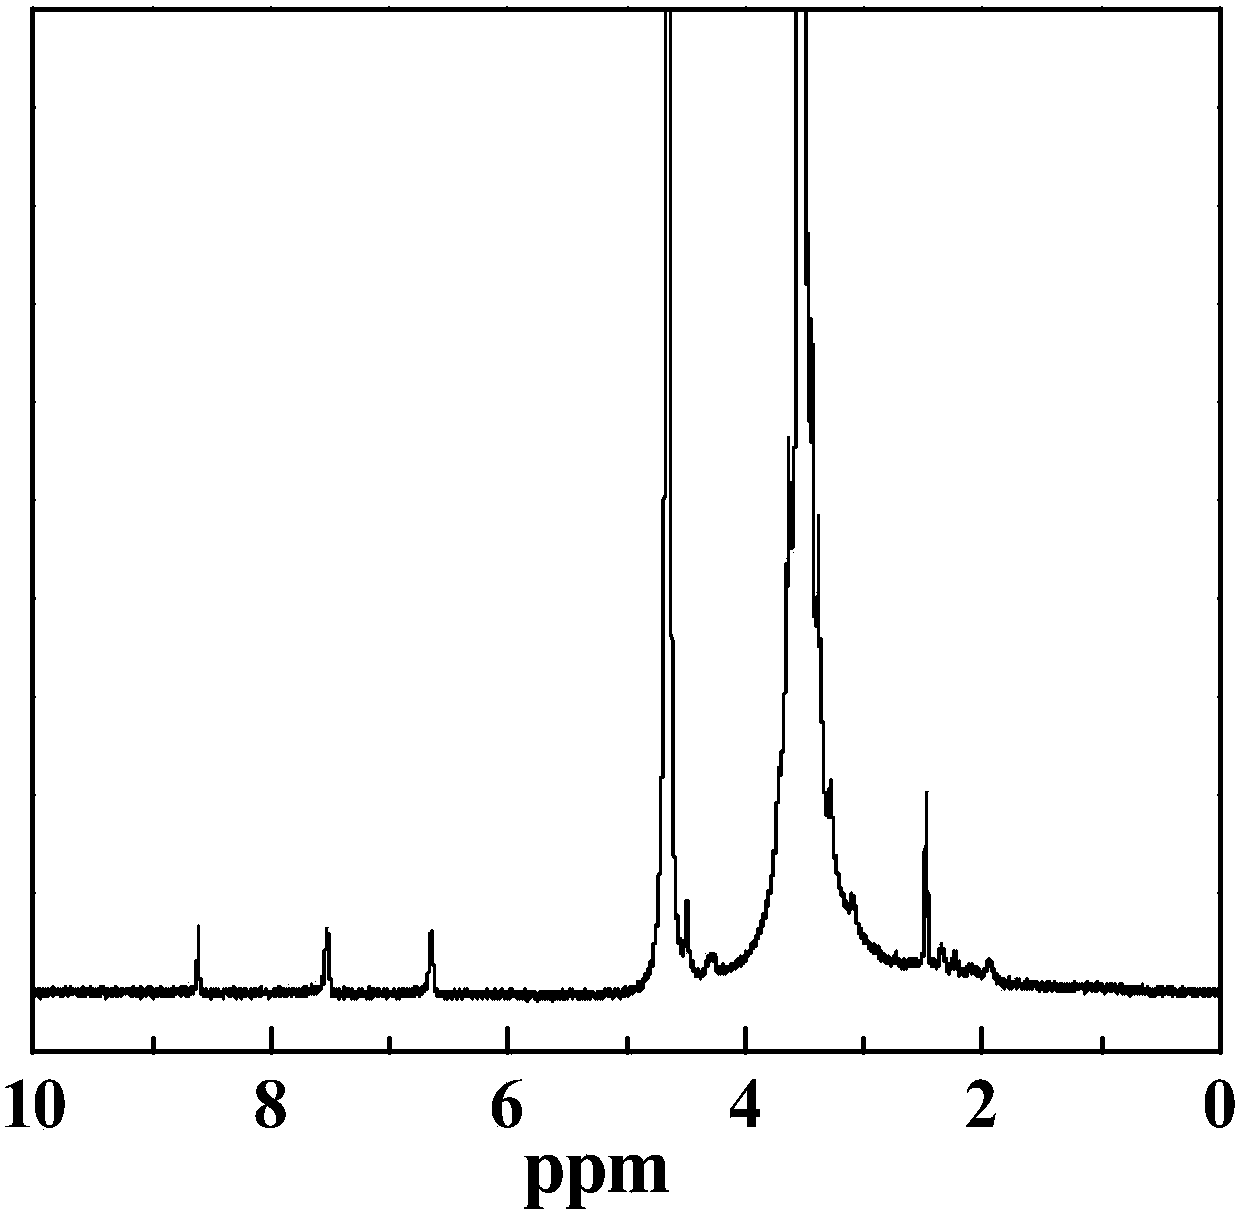 A preparation method of 64cu-labeled folic acid-targeted functionalized polyethyleneimine stabilized trimanganese tetraoxide nanoparticles